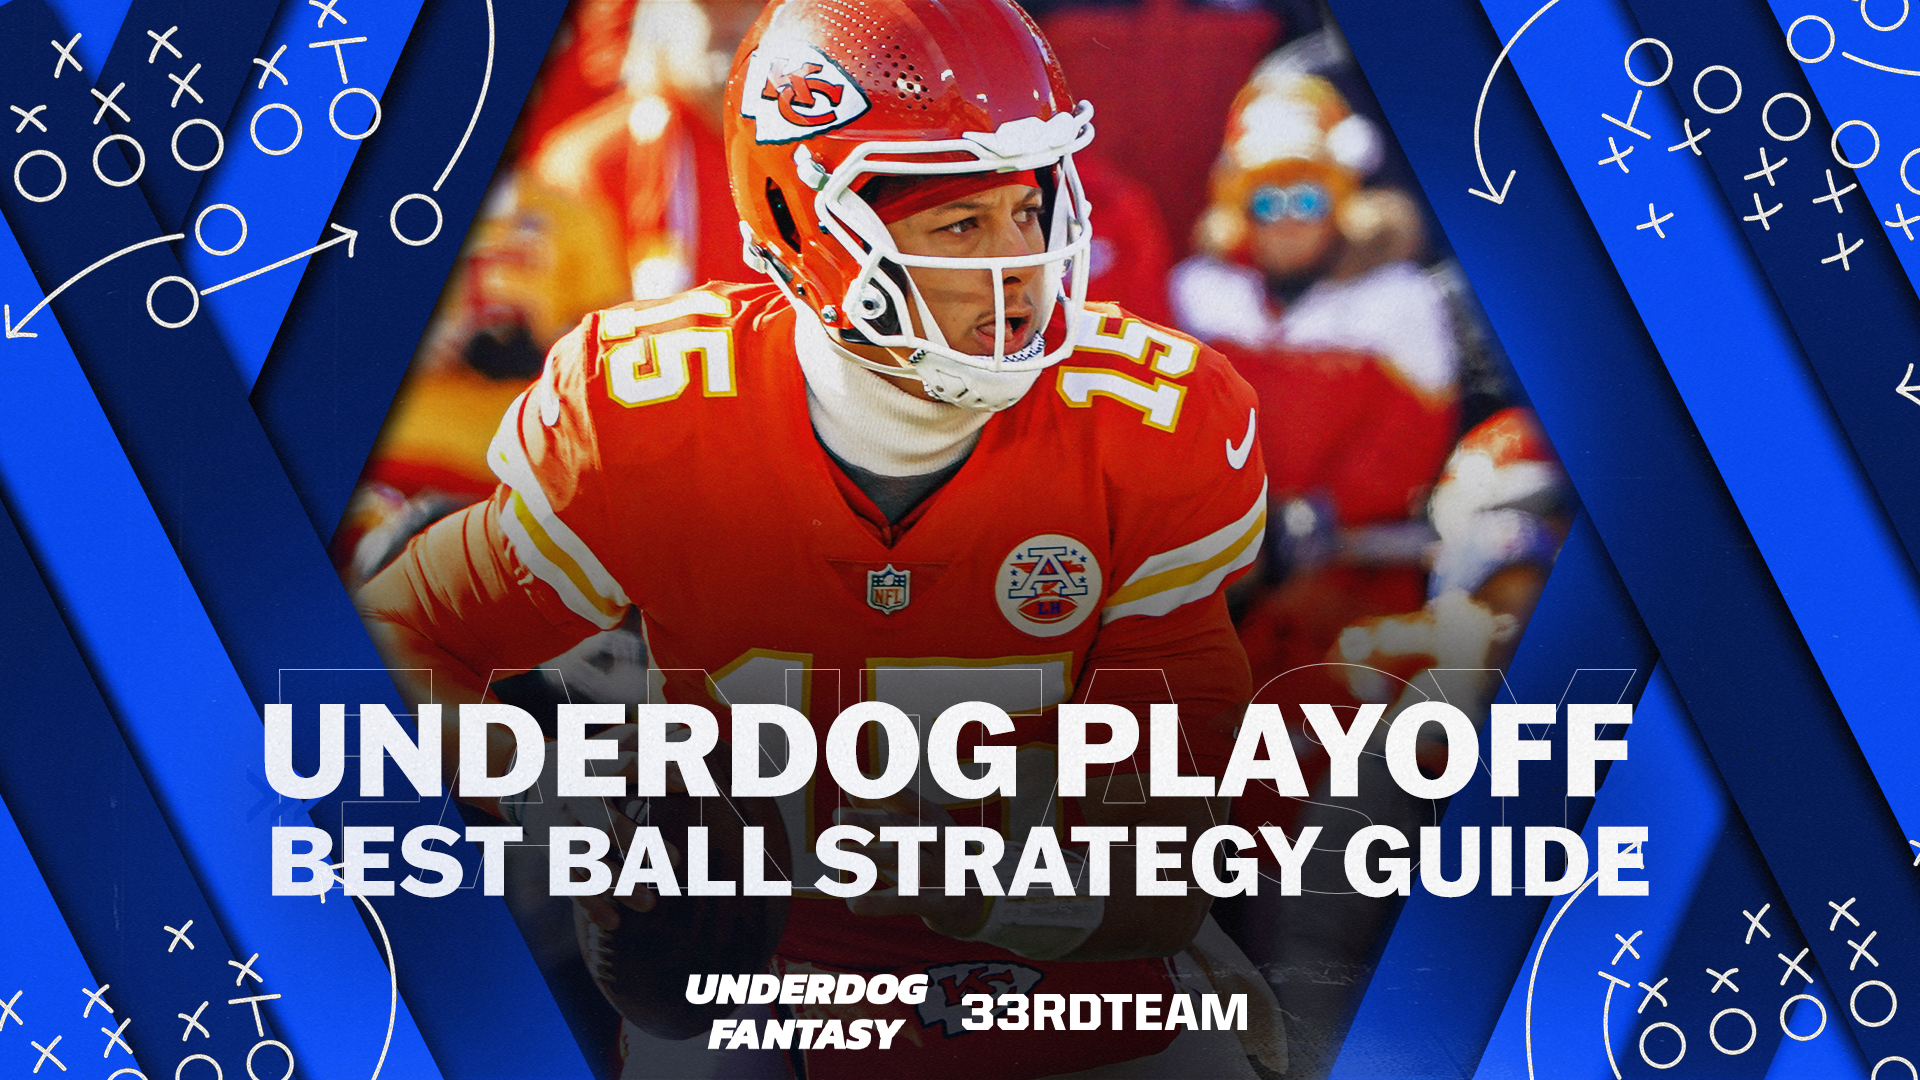 Underdog Fantasy Football Playoff Best Ball Guide for NFL Playoffs